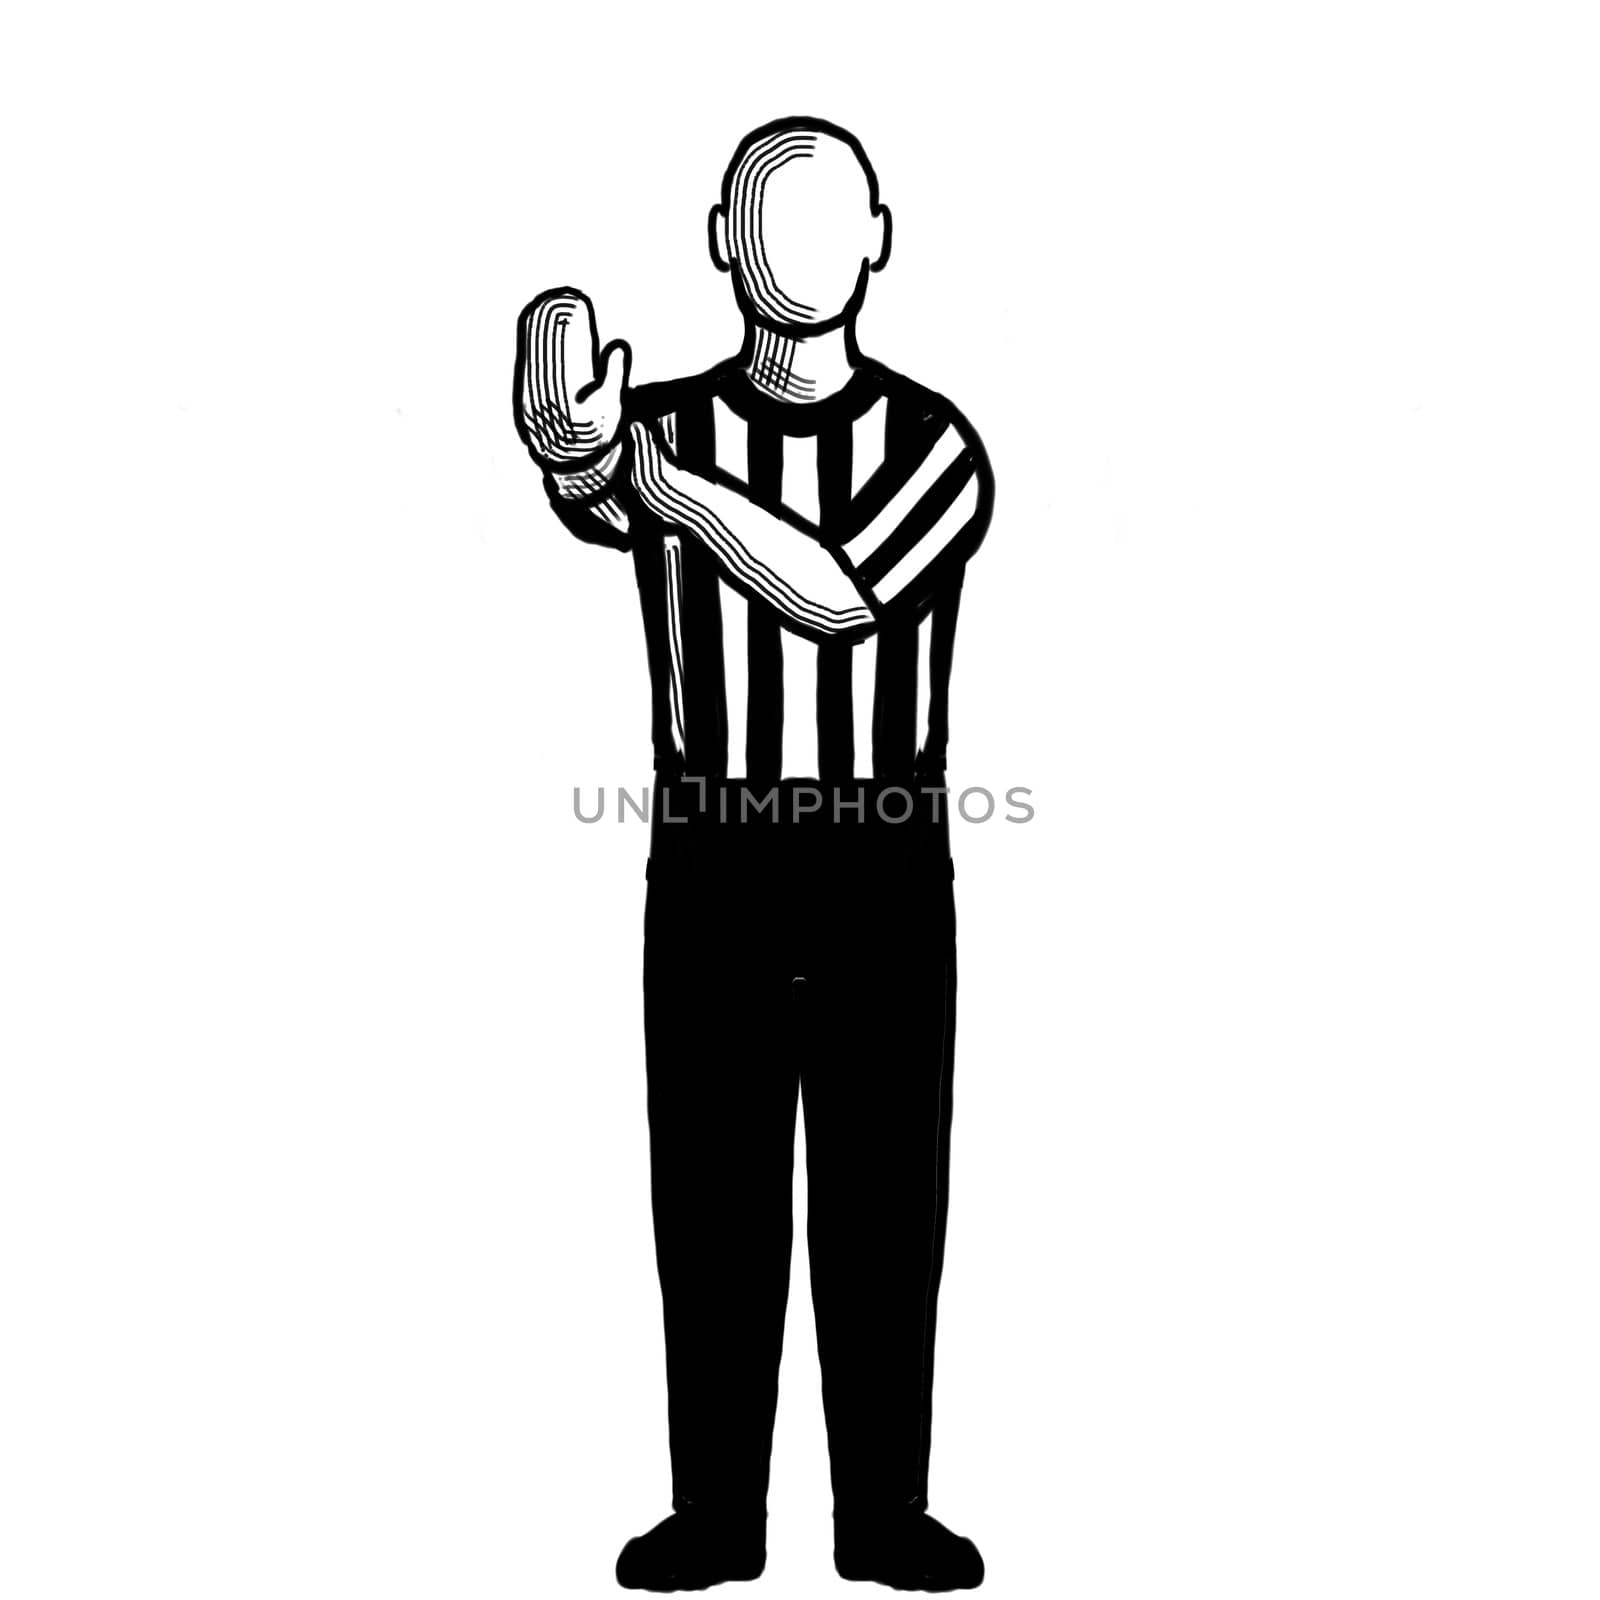 Basketball Referee hand check Hand Signal Retro Black and White by patrimonio